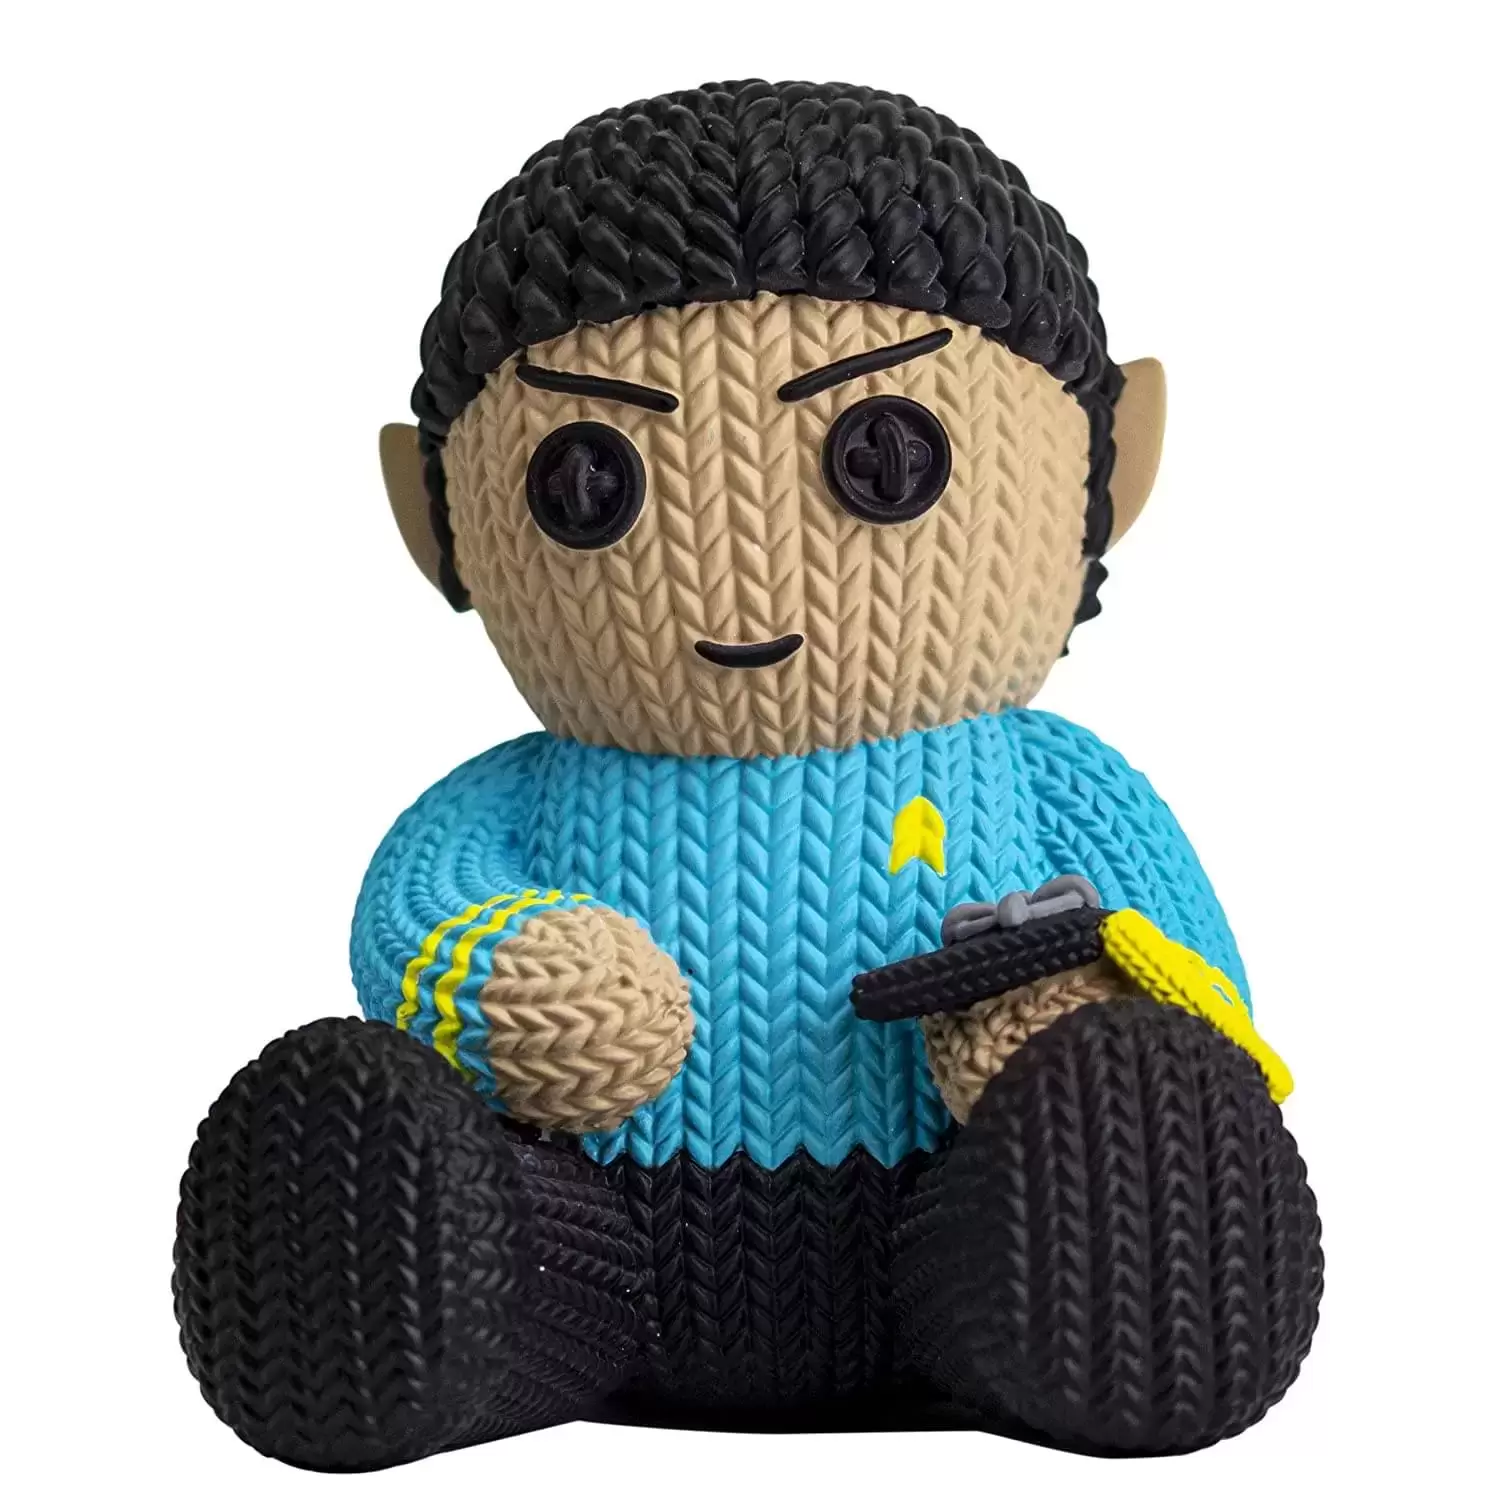 Handmade By Robots - Star Trek - Spock